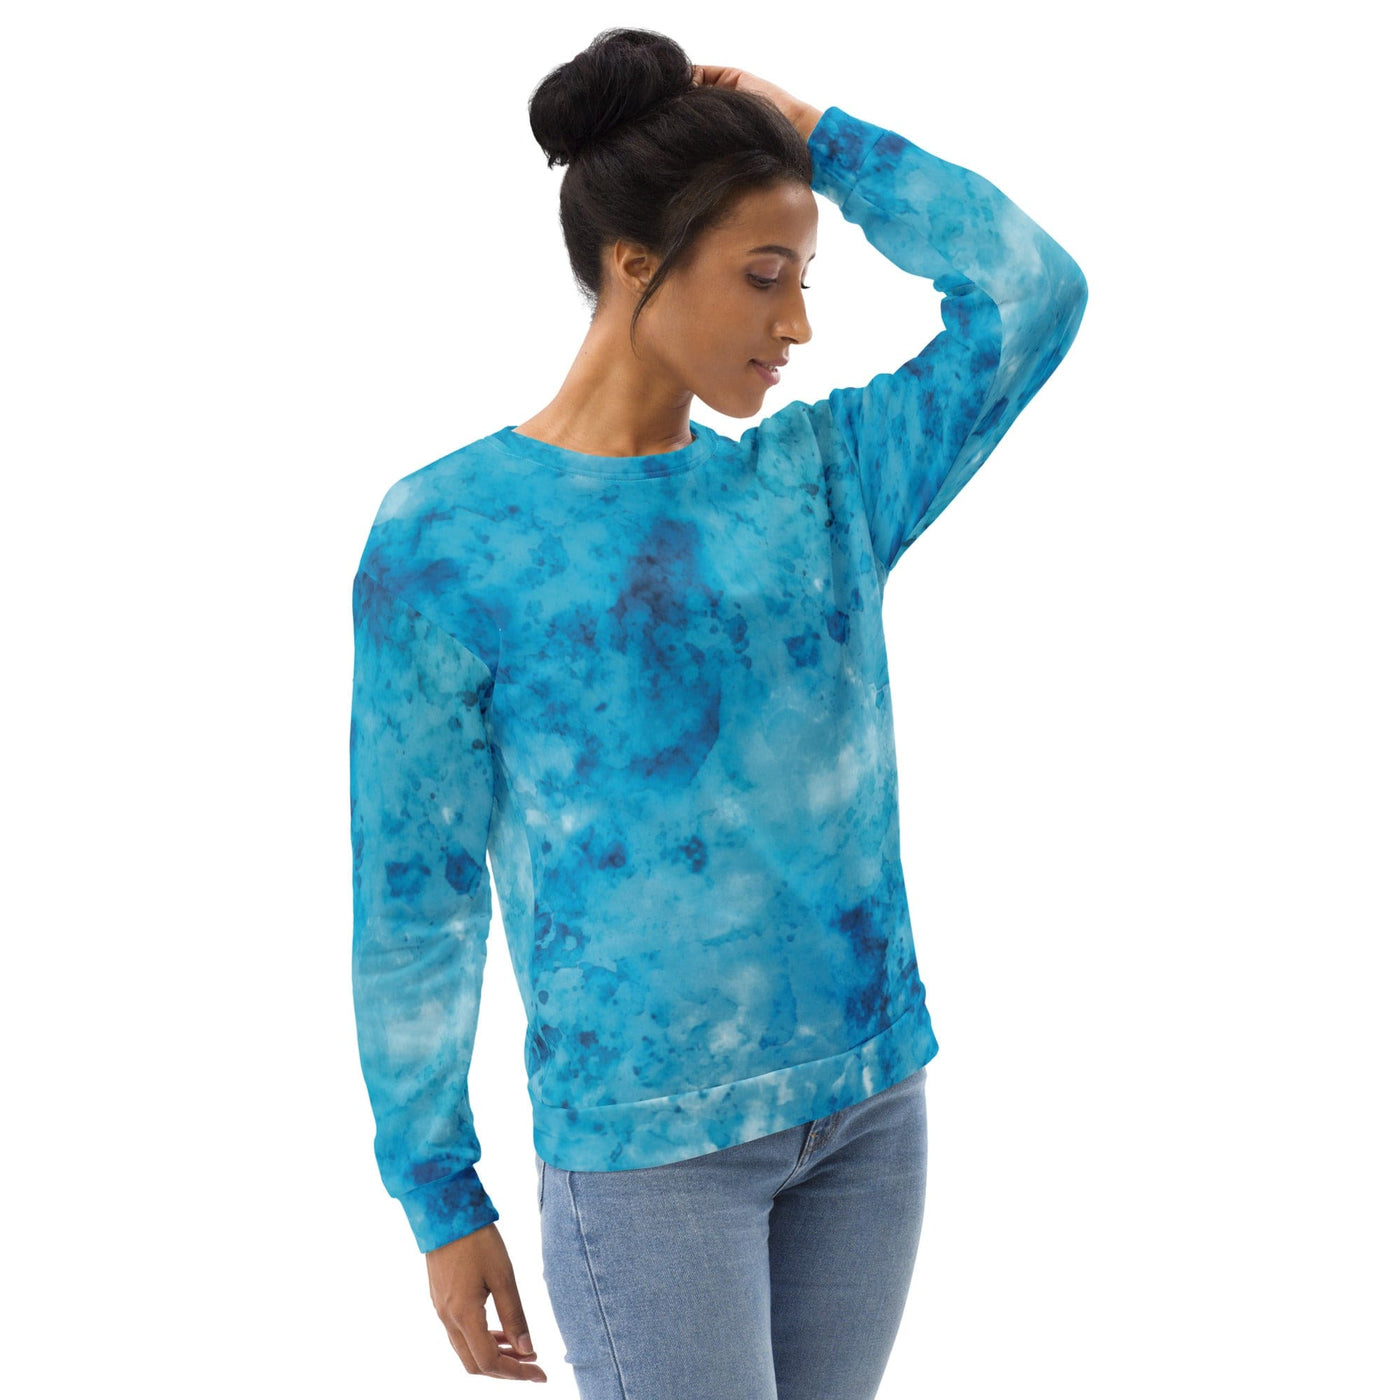 Graphic Sweatshirt For Women Light And Dark Blue Marble Illustration - Womens